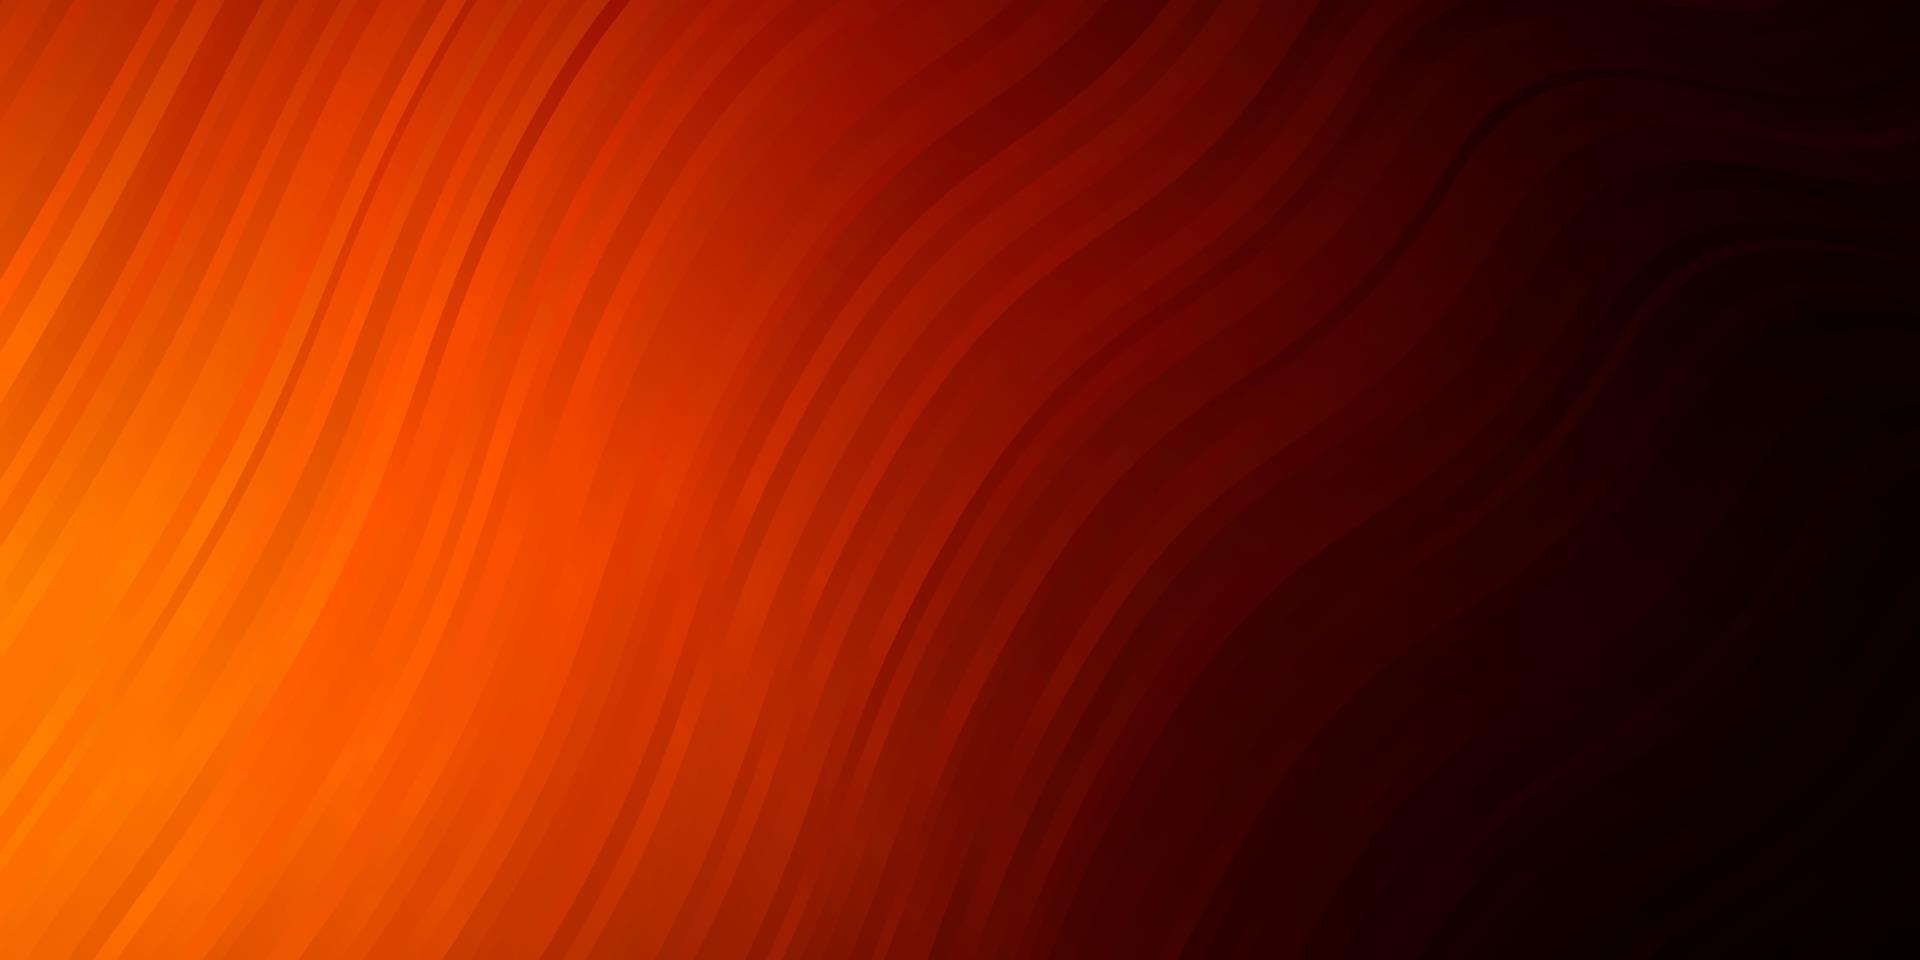 Dark Orange vector texture with curves.